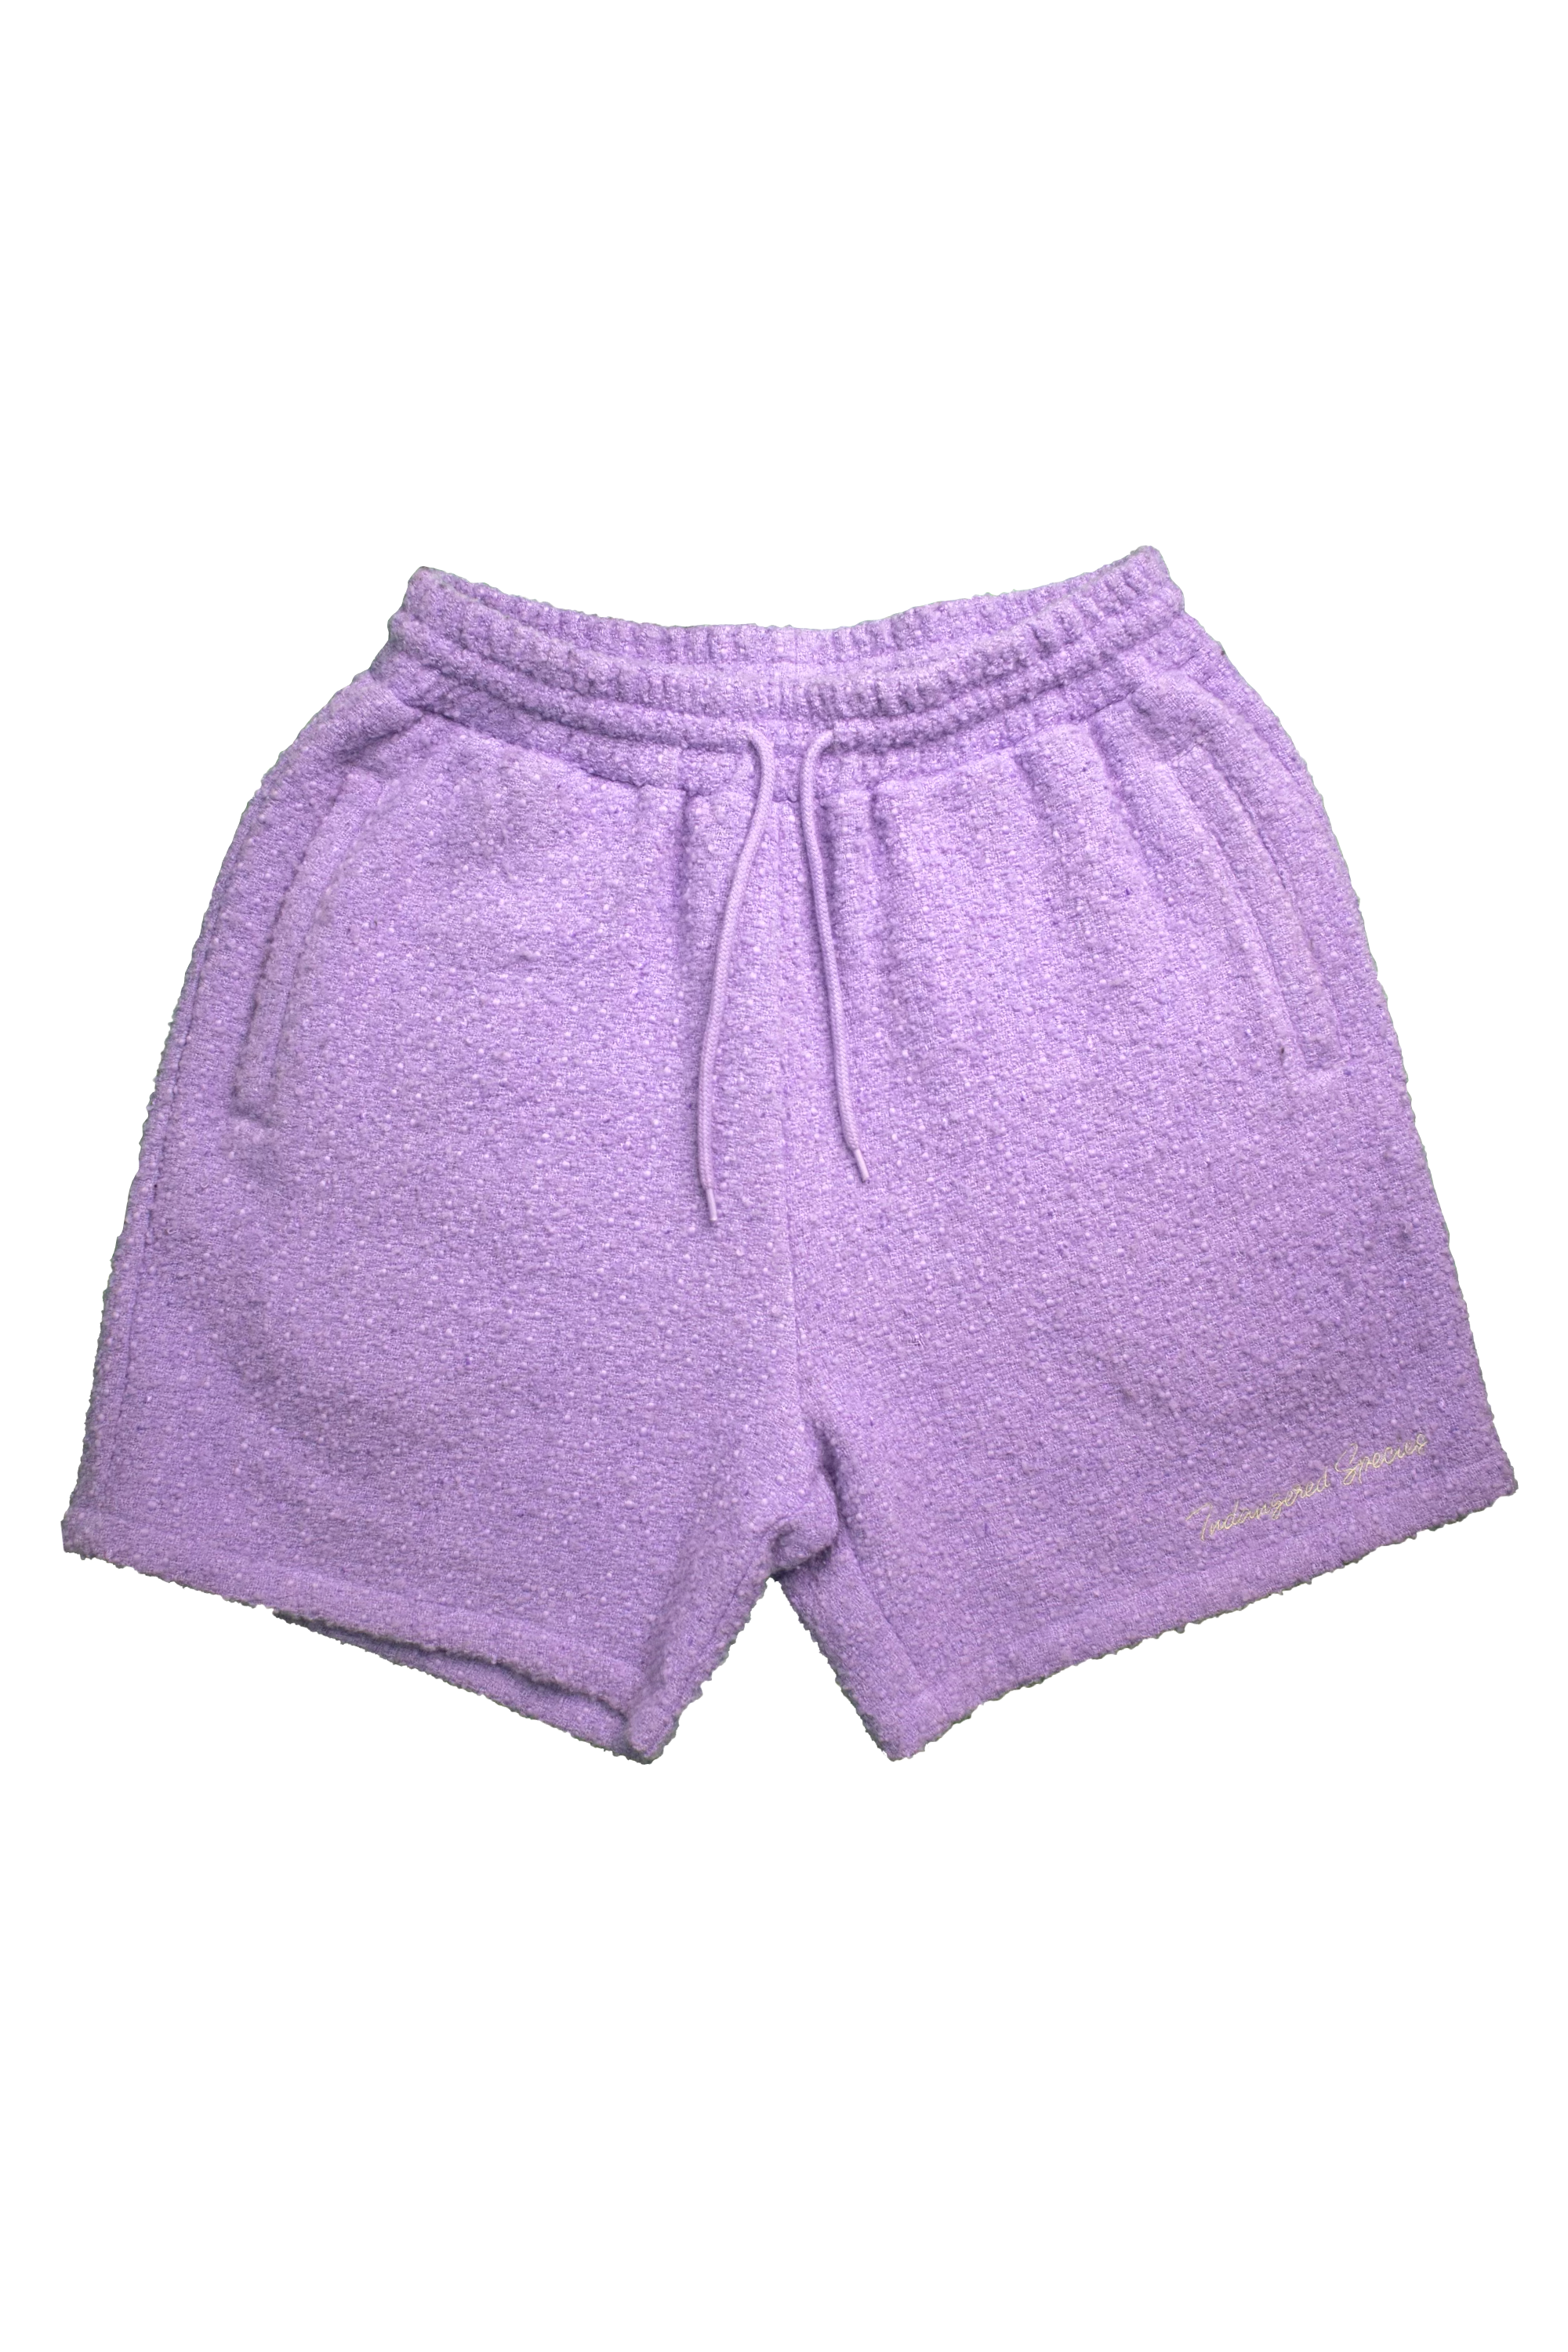 Lavender Statesman Shorts